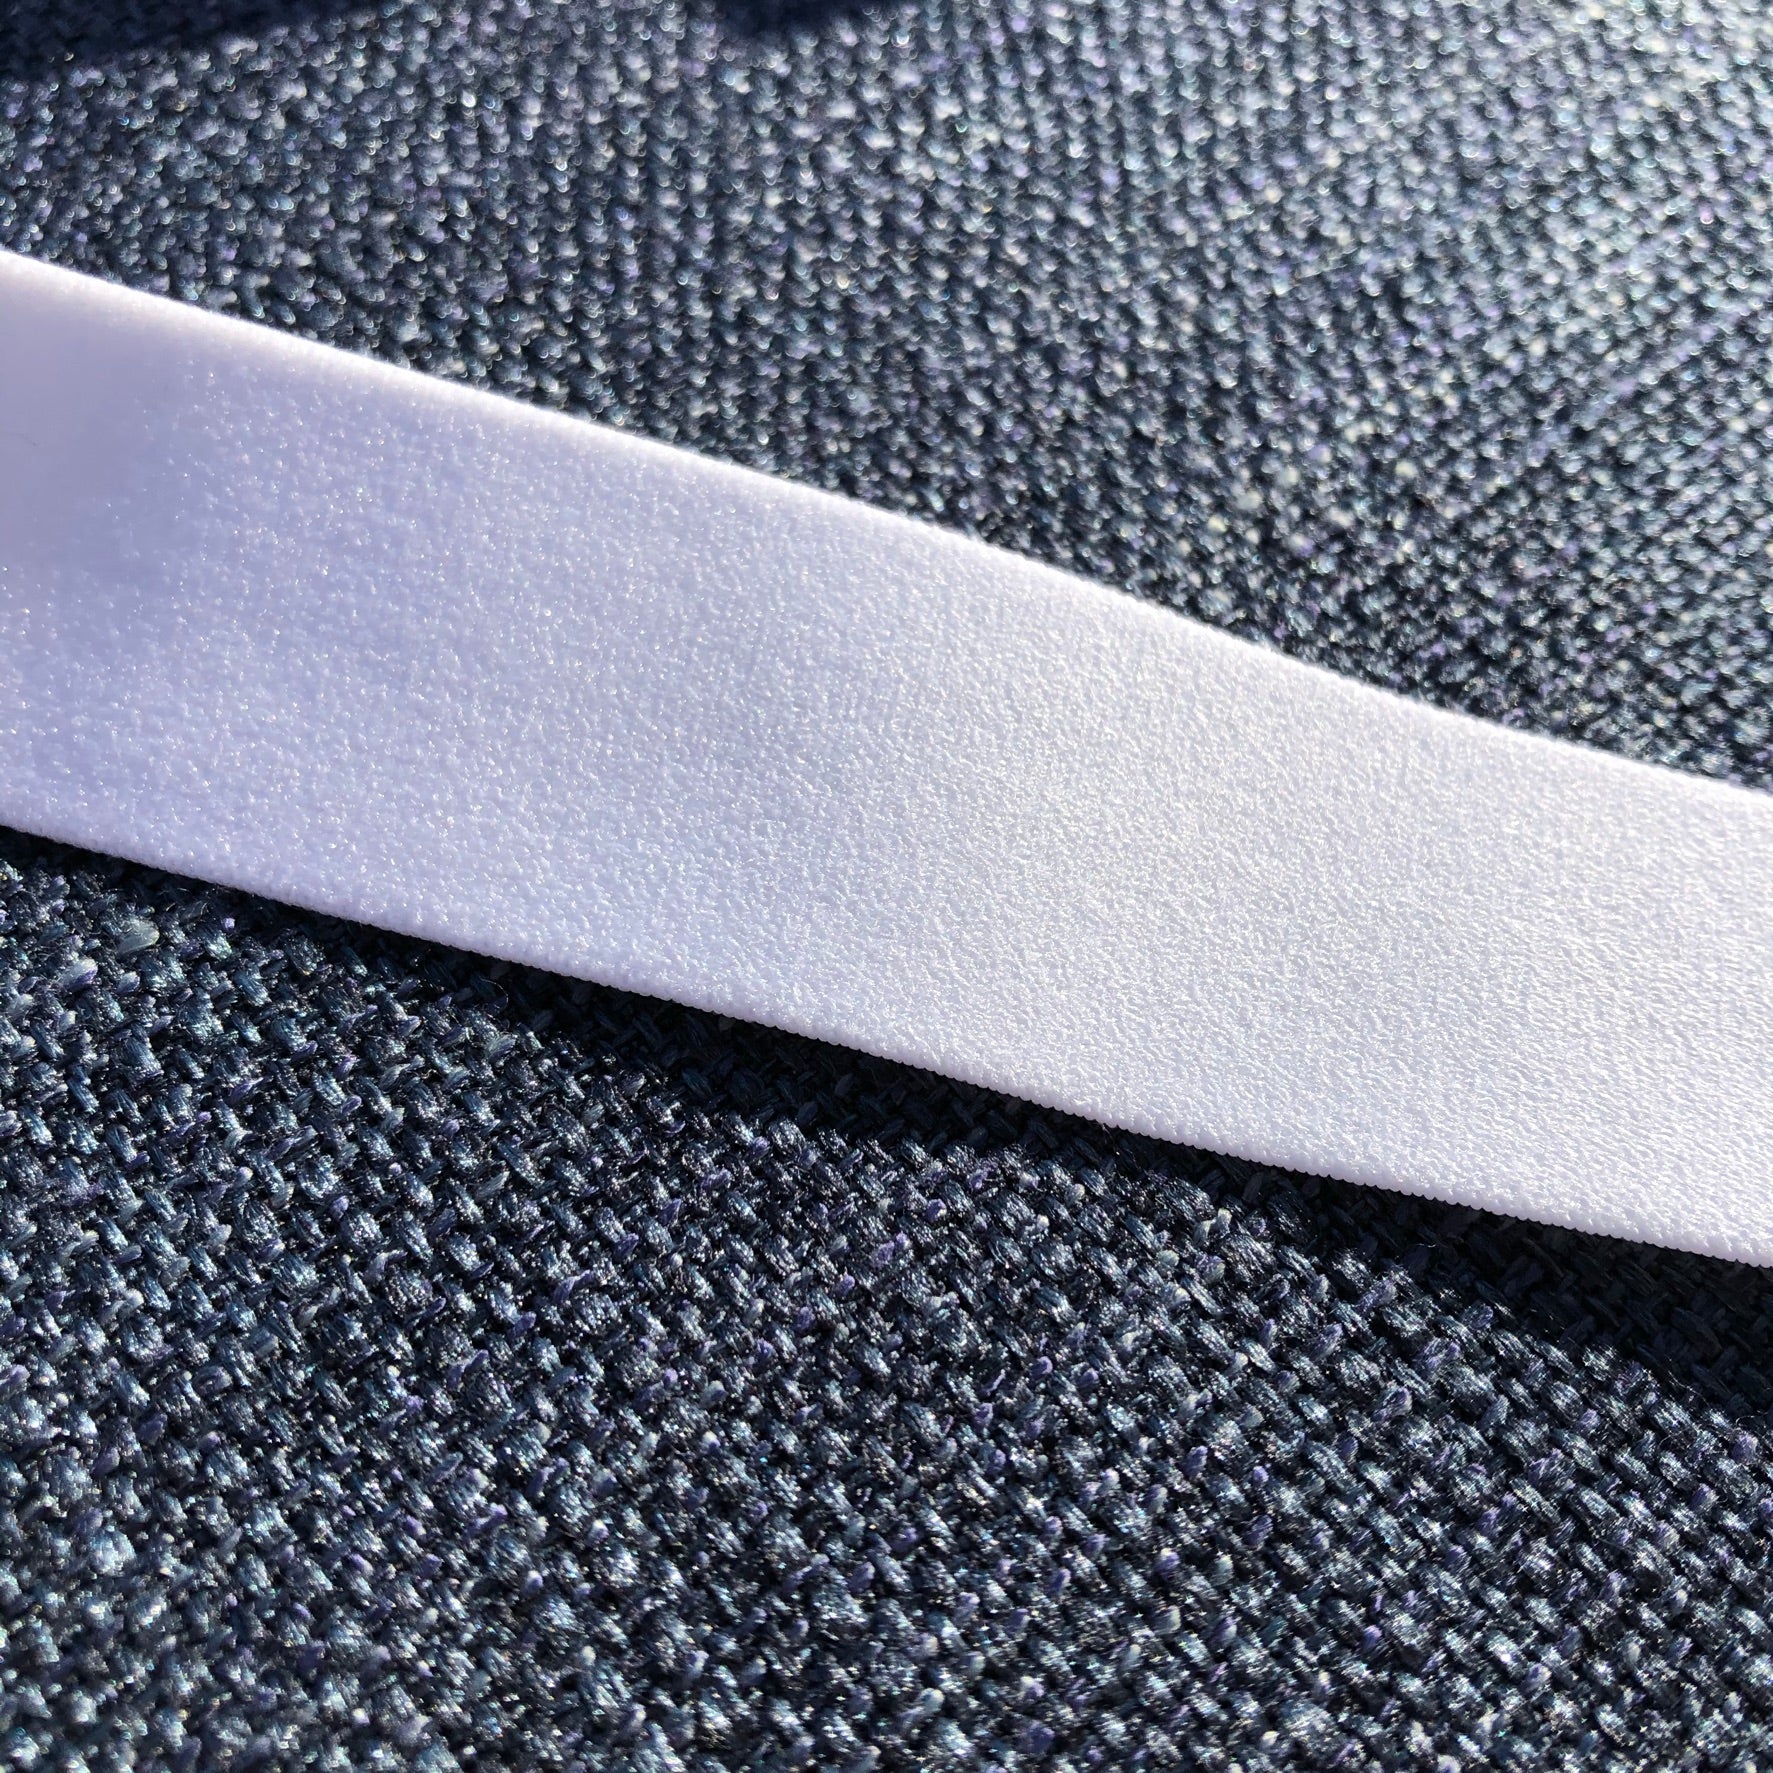 1.5 inch (38mm) White Plush Elastic ,1 1/4 inch(30mm) Soft Elastic Ban